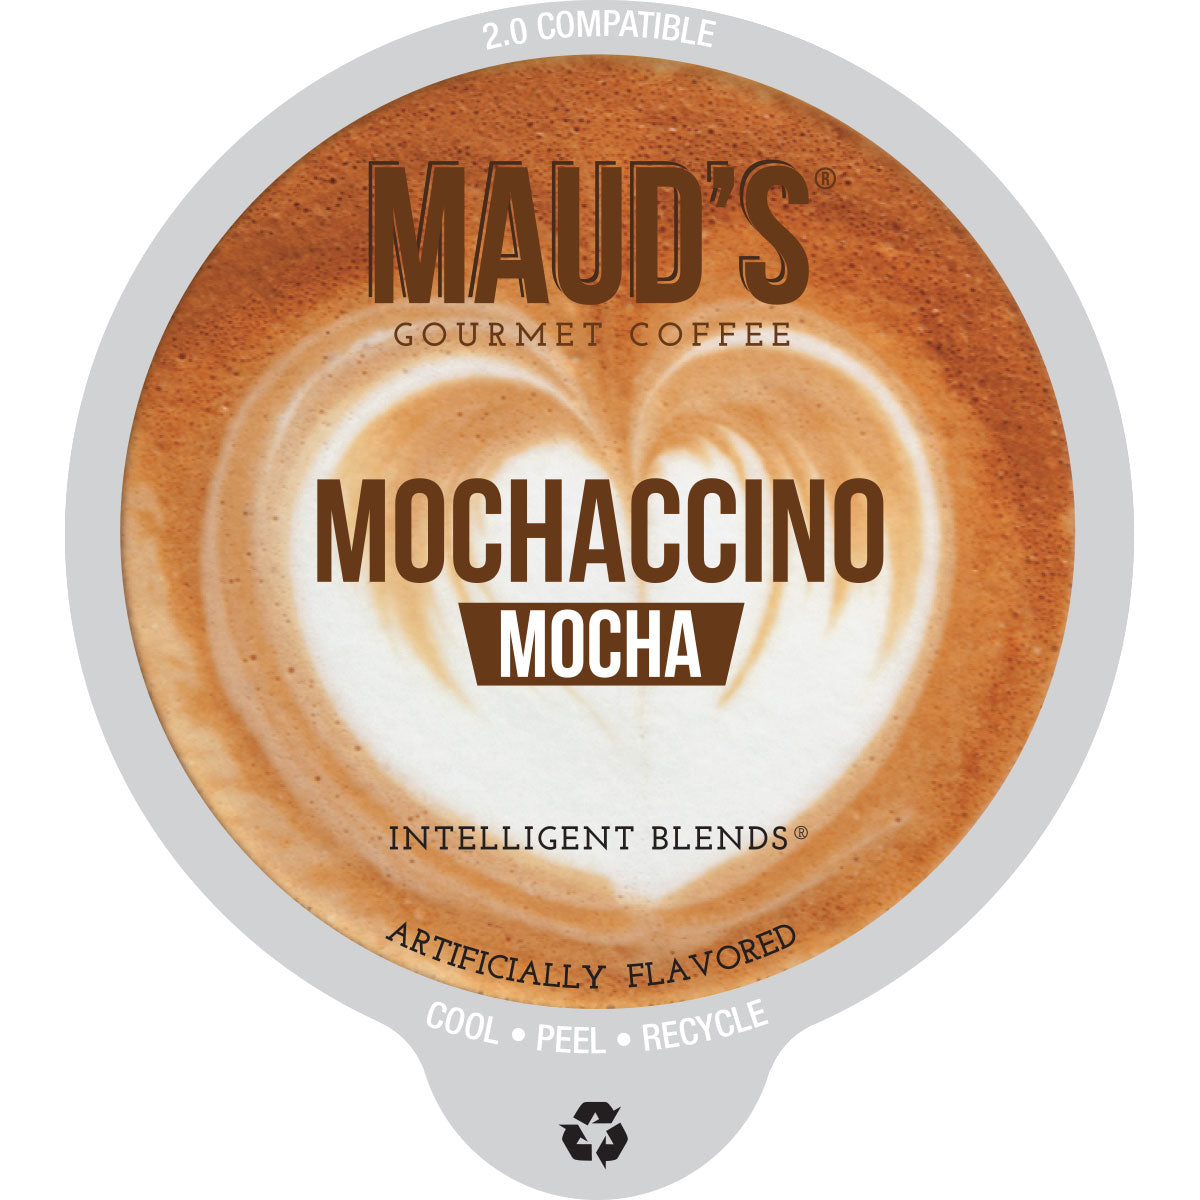 Maud's Chocolate Mocha Cappuccino Coffee Pods (Mochaccino) - 100ct